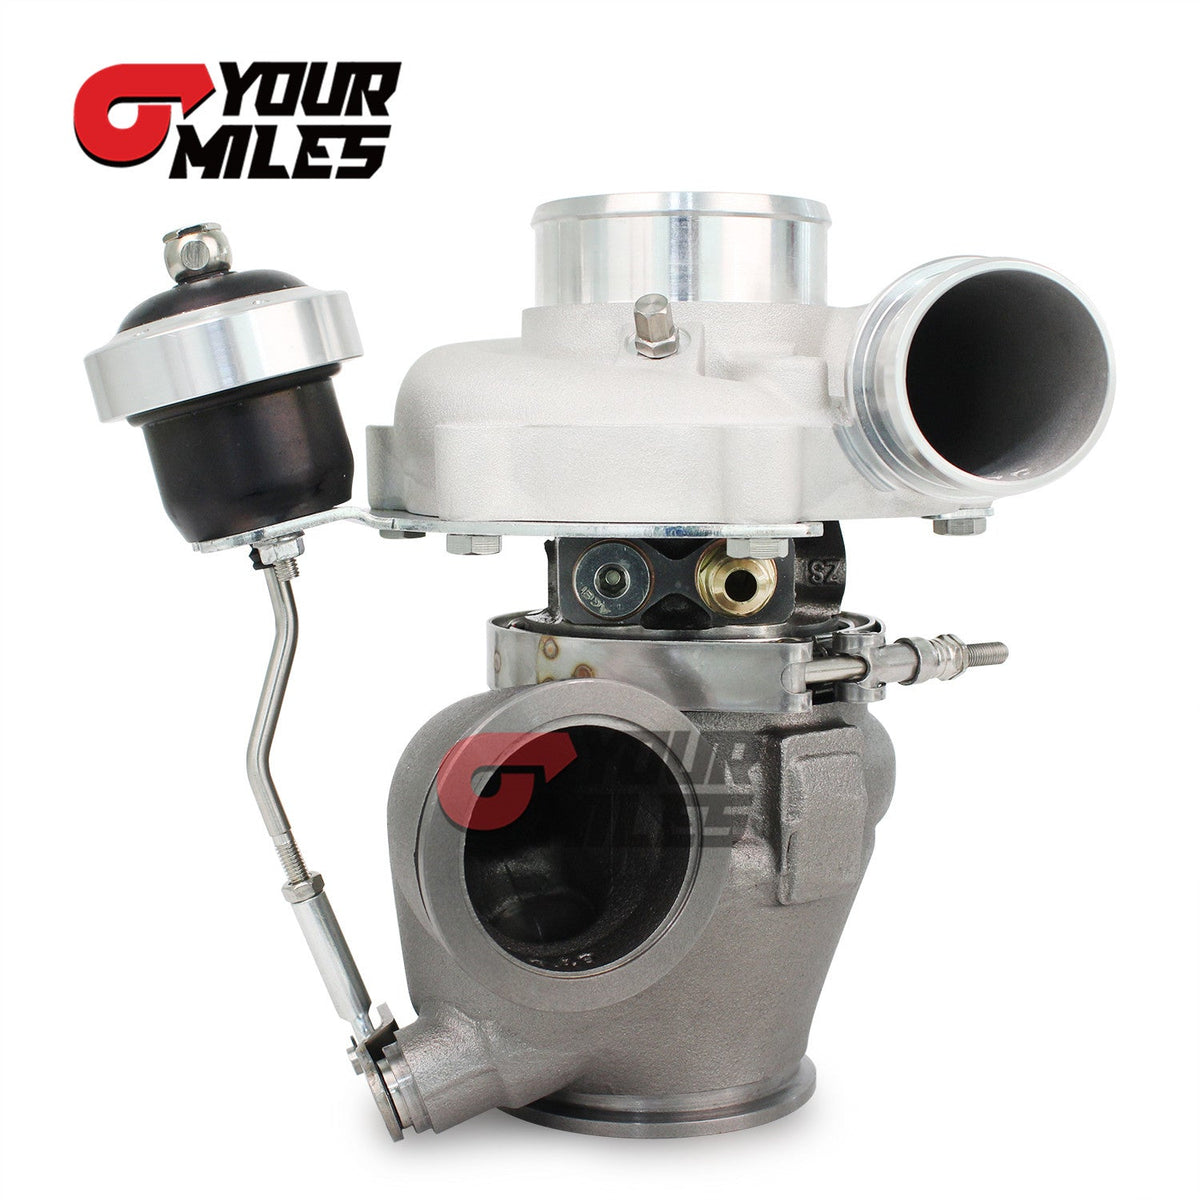 Yourmiles G25-660 Billet Wheel Dual Ball Bearing TurboCharger Wastegated 0.72 Vband TH